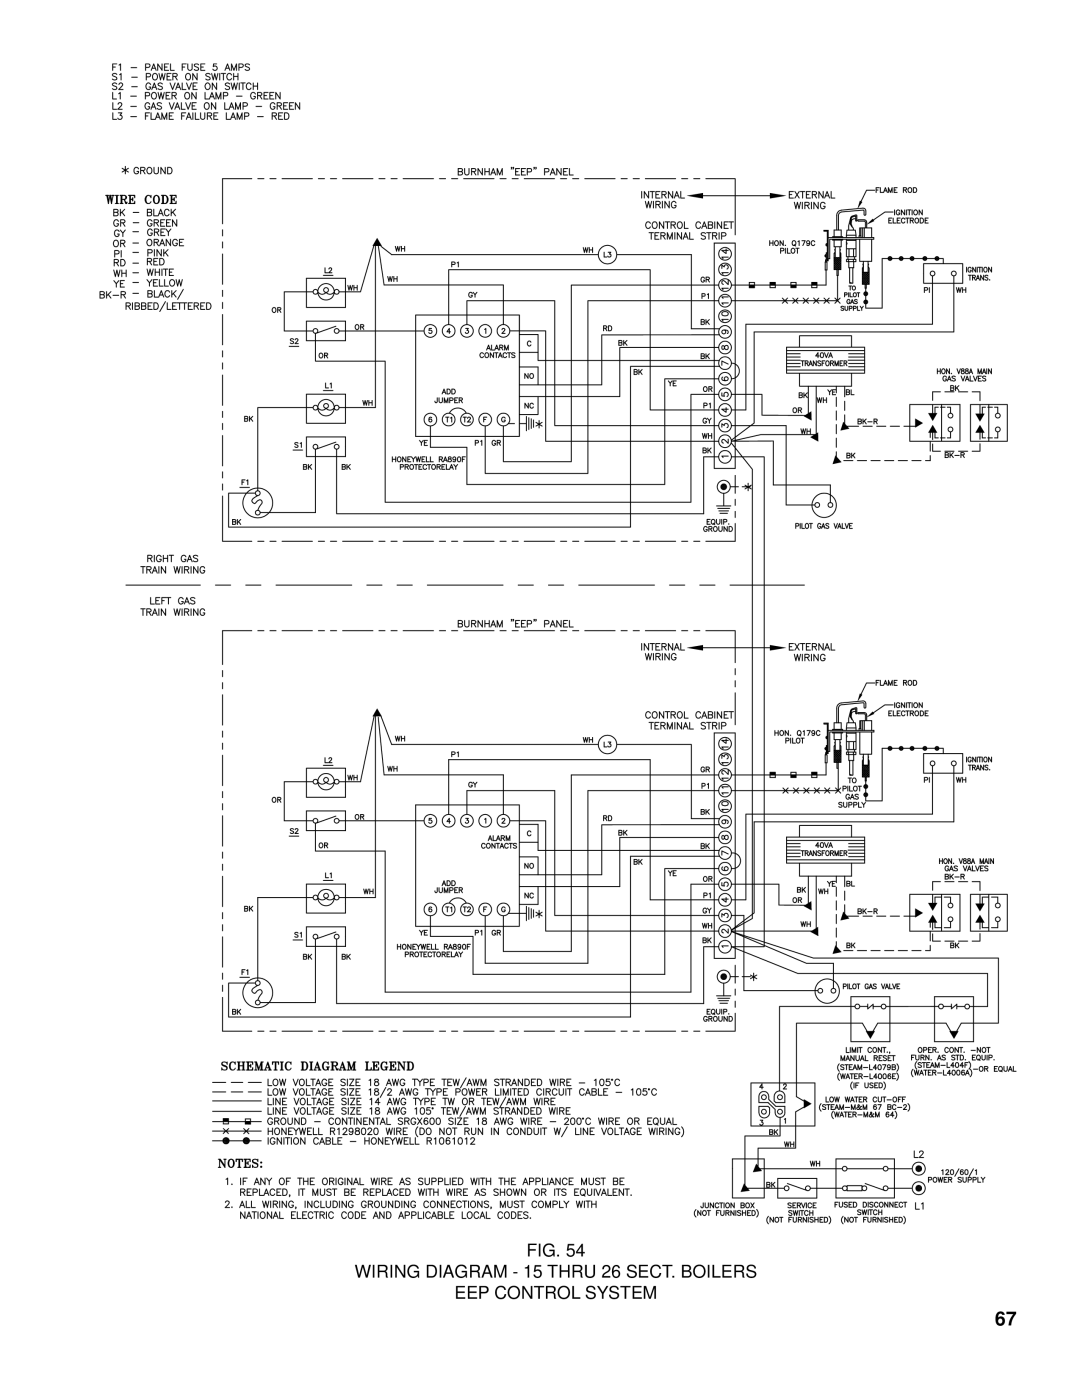 Burnham K50 manual Wiring Diagram 15 Thru 26 SECT. Boilers EEP Control System 